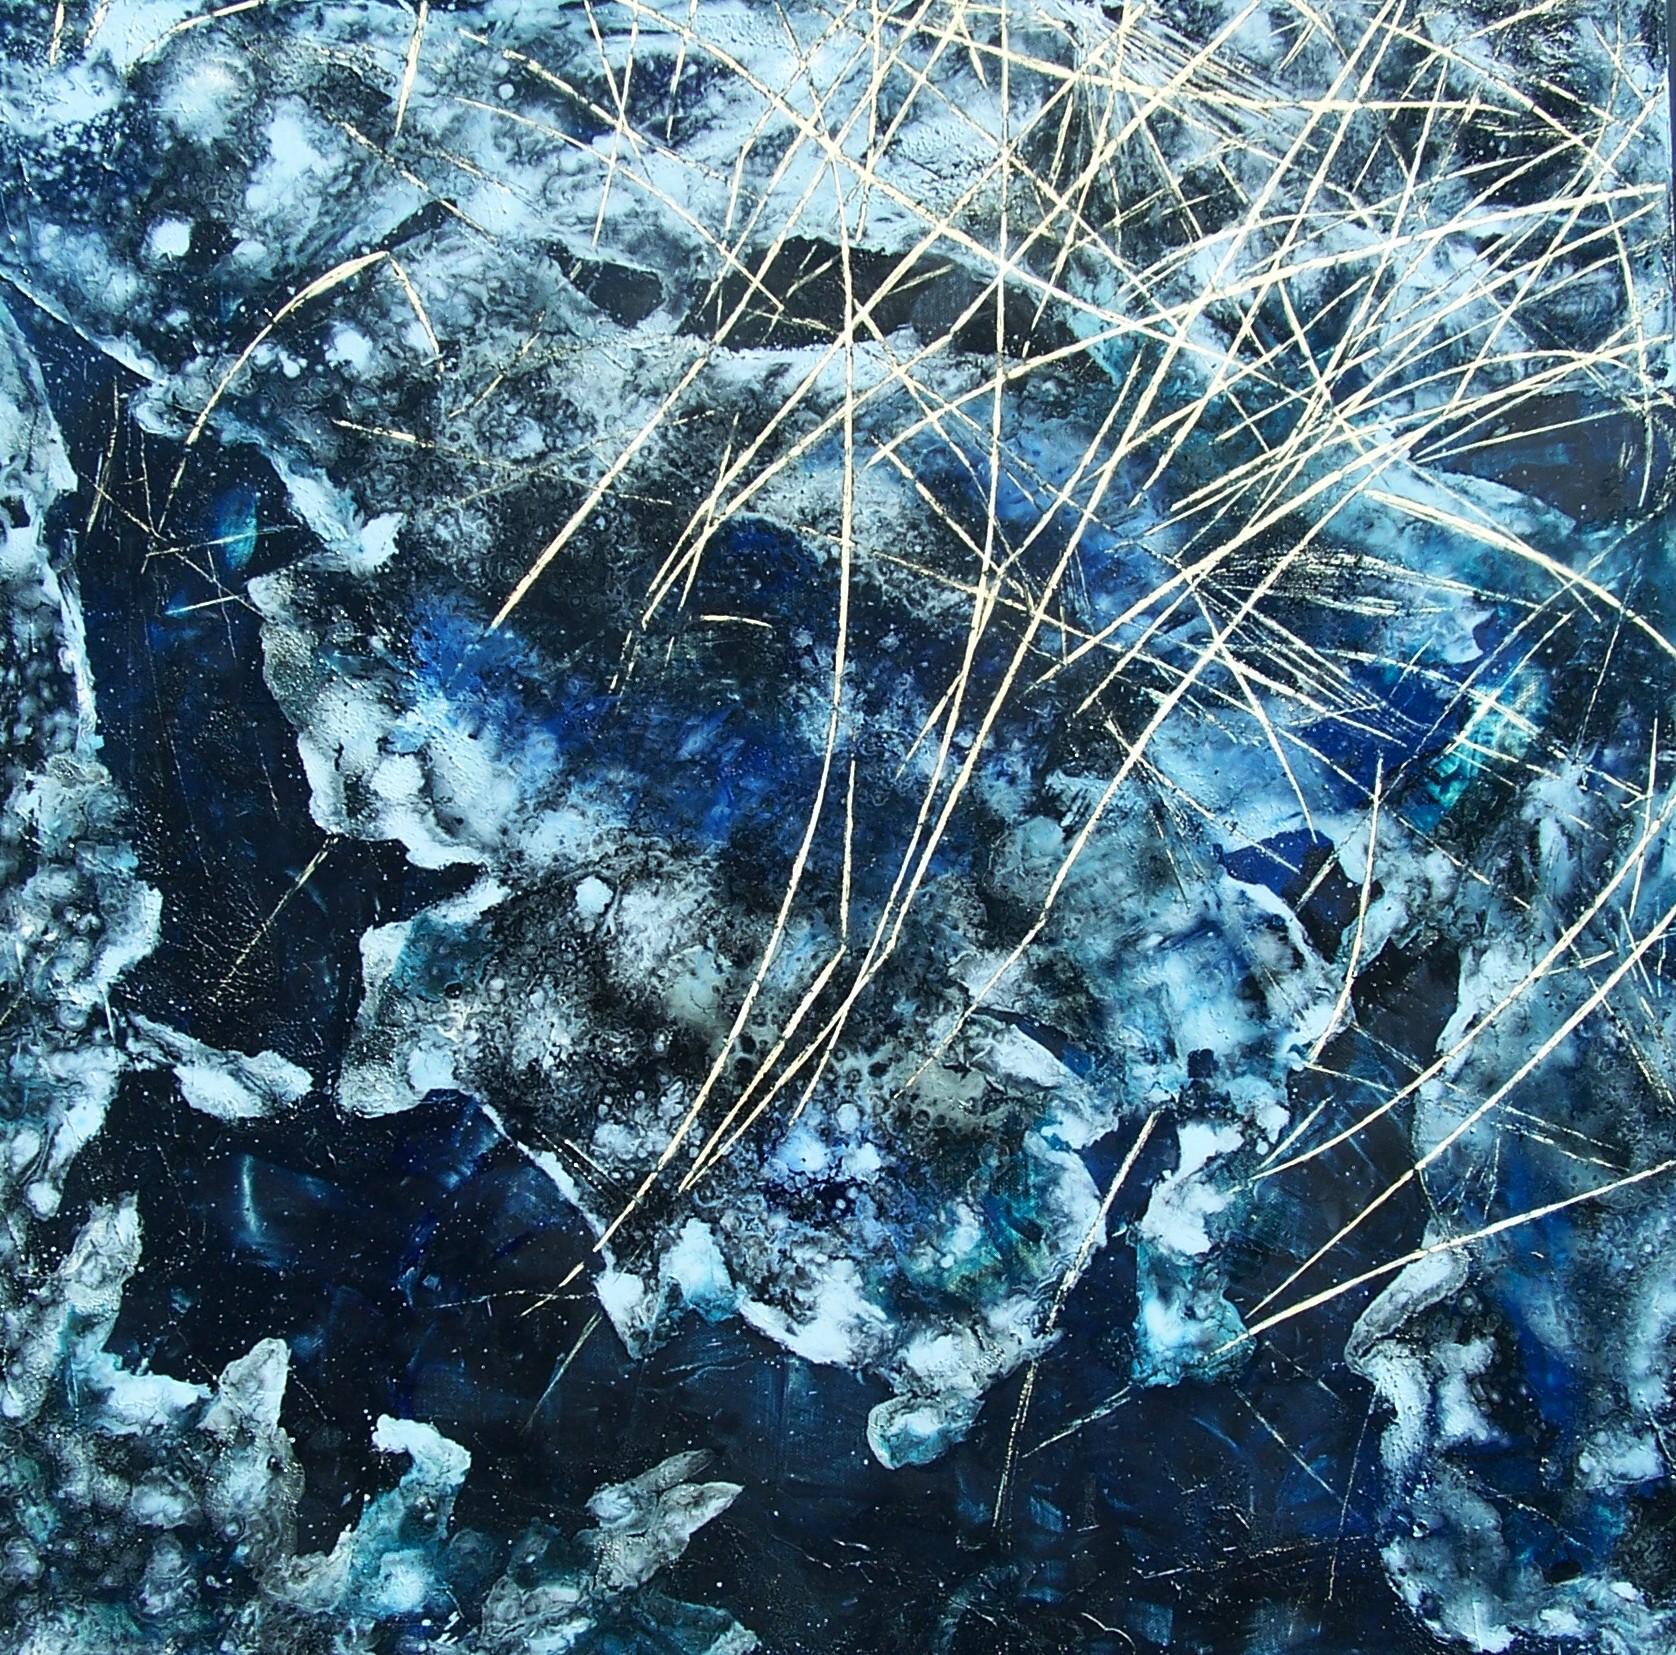 Frozen Line, Winter reeds 1, oil on canvas